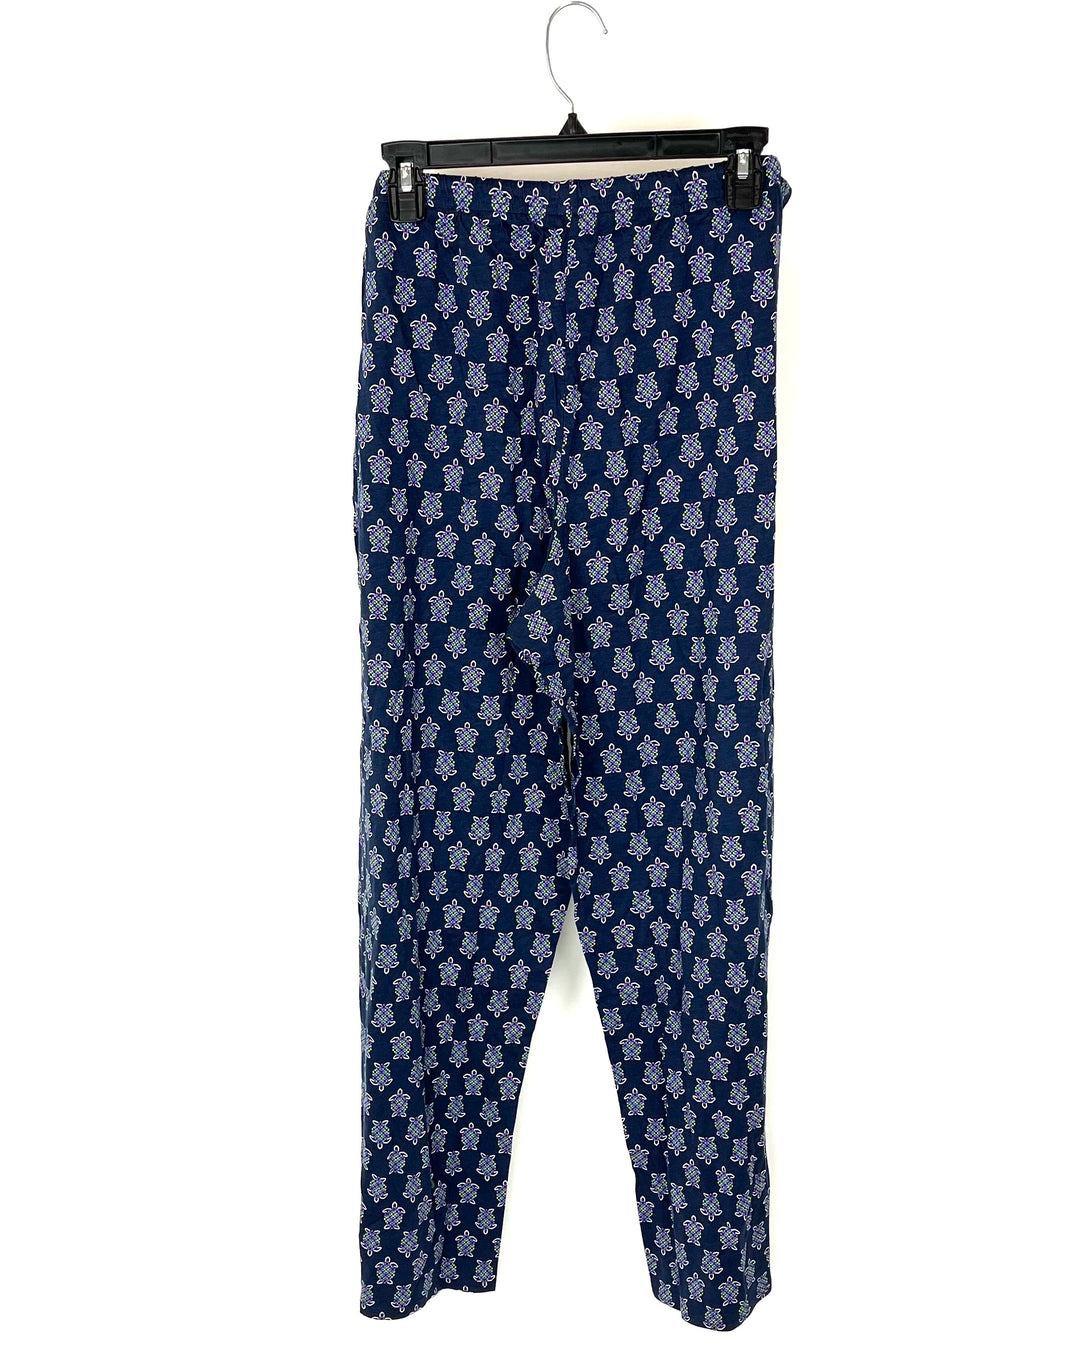 Turtle Print Pajama Pants - Small, 1X